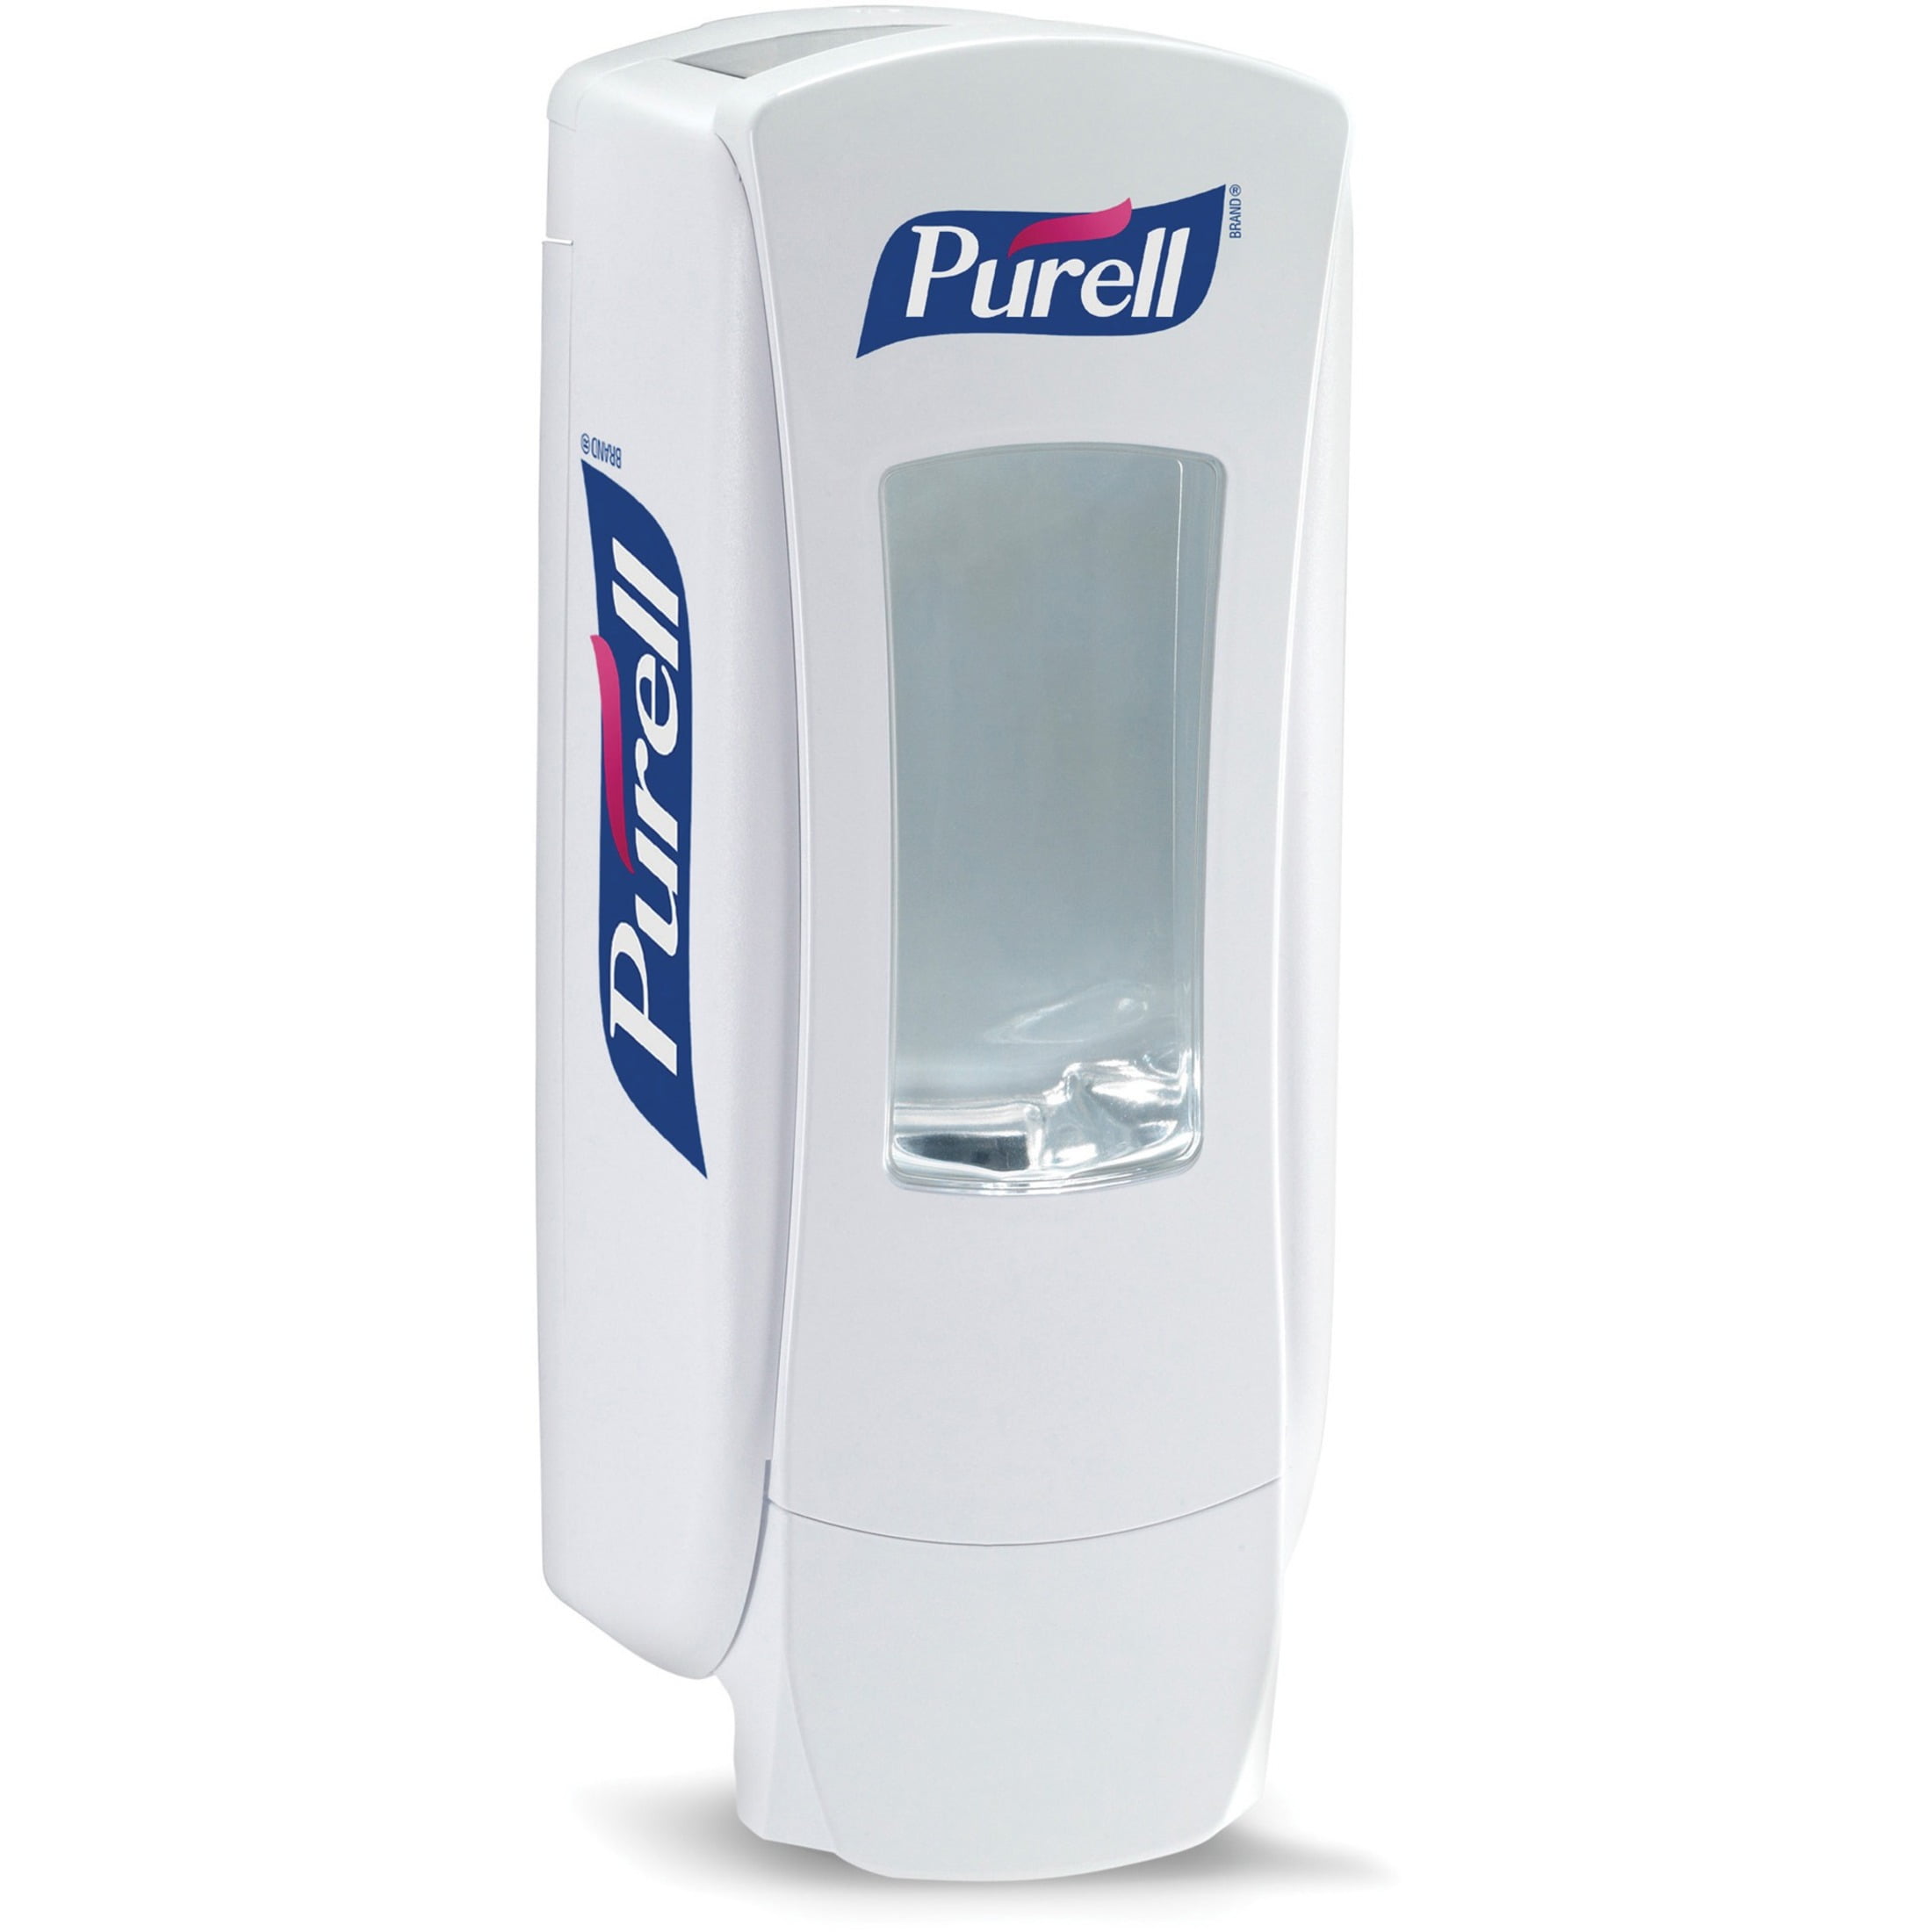 GOJO Provon TFX Touch Soap Dispenser System 2745 01 for sale online 